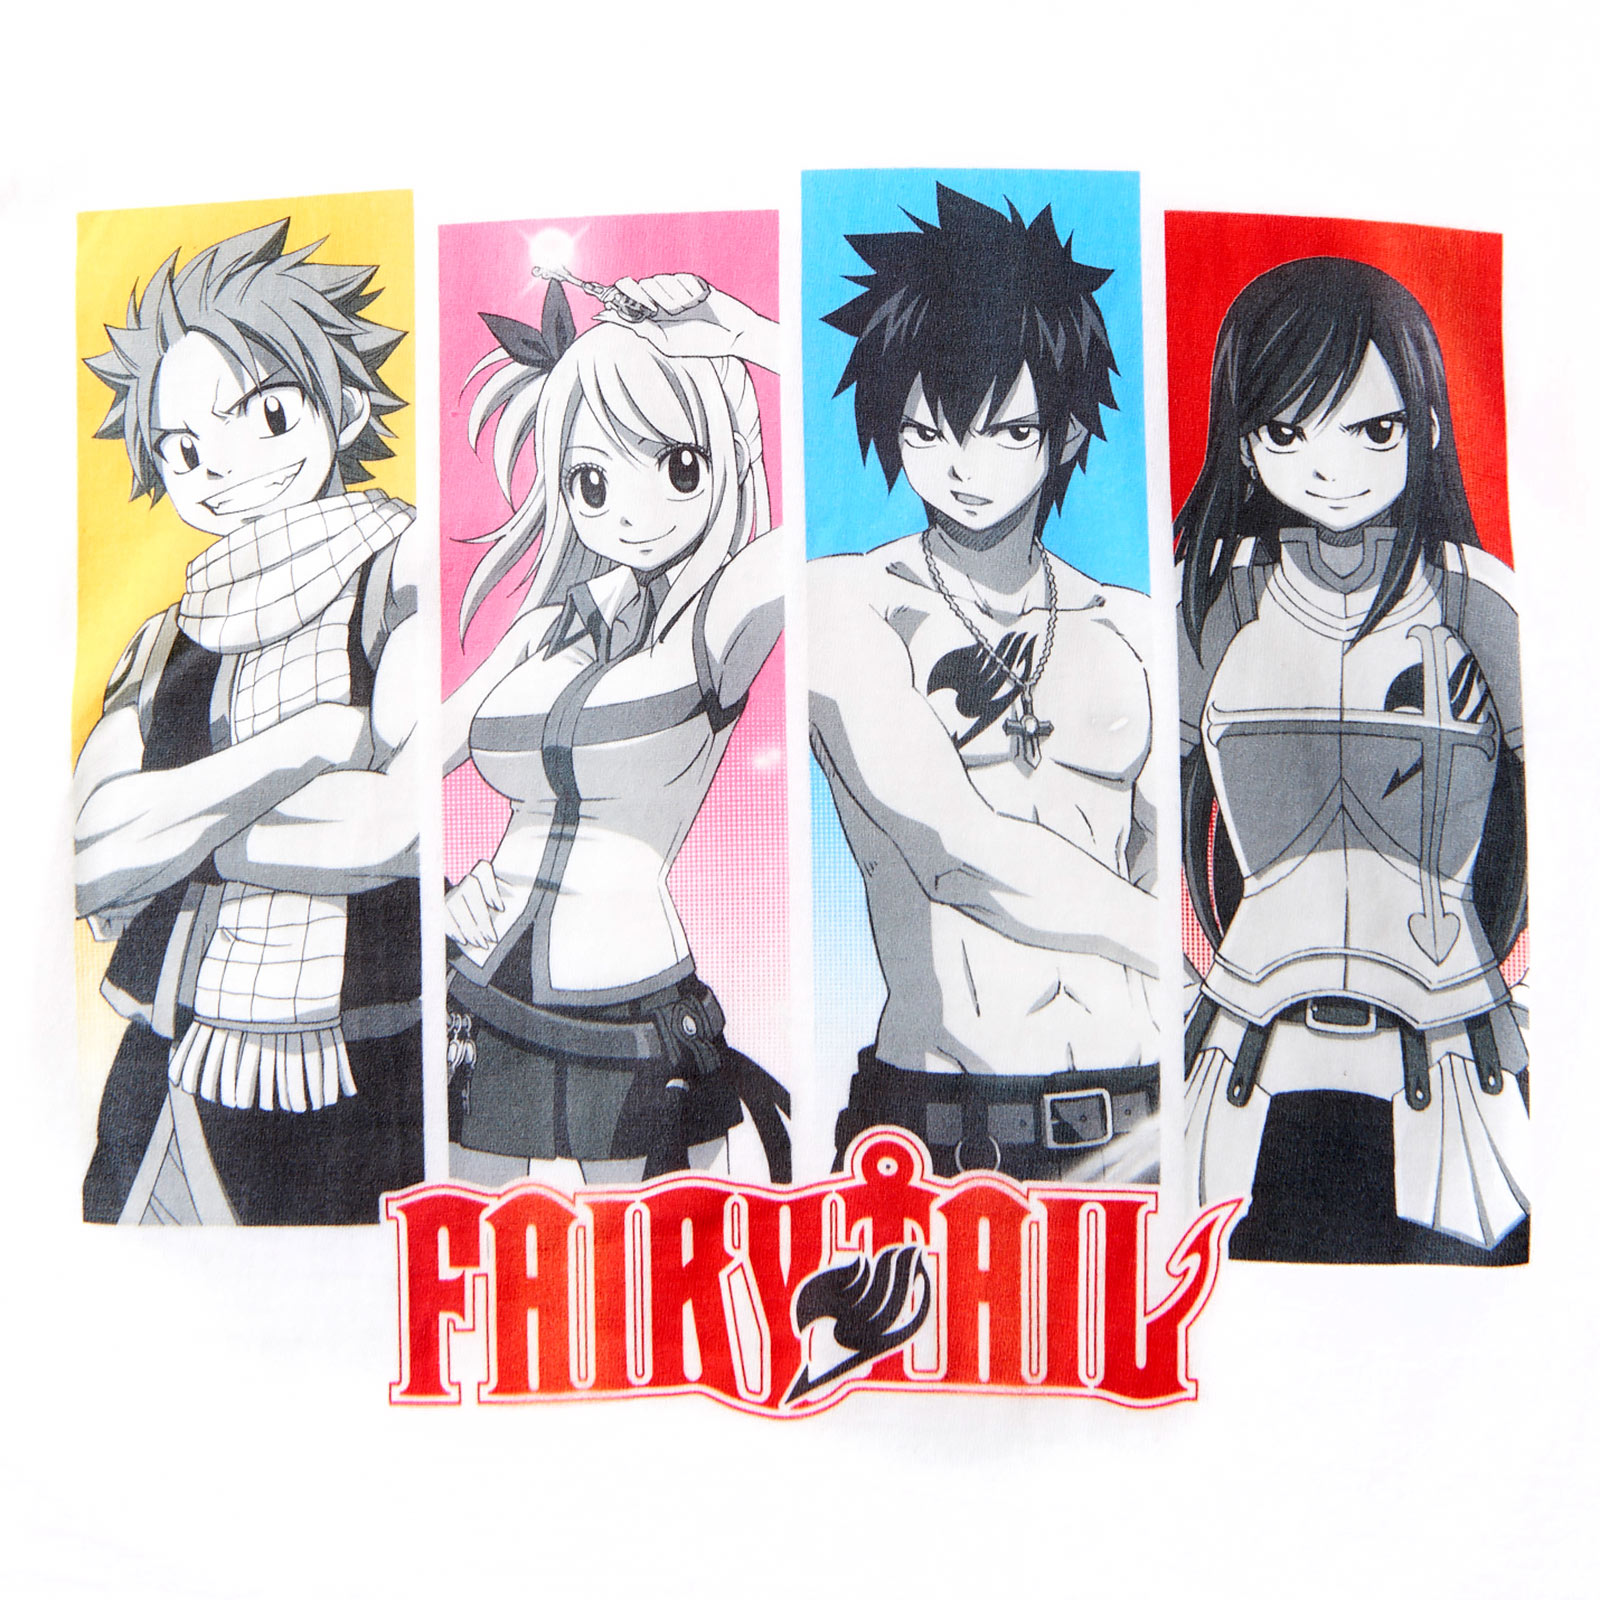 Fairy Tail - Team T-Shirt Damen weiß